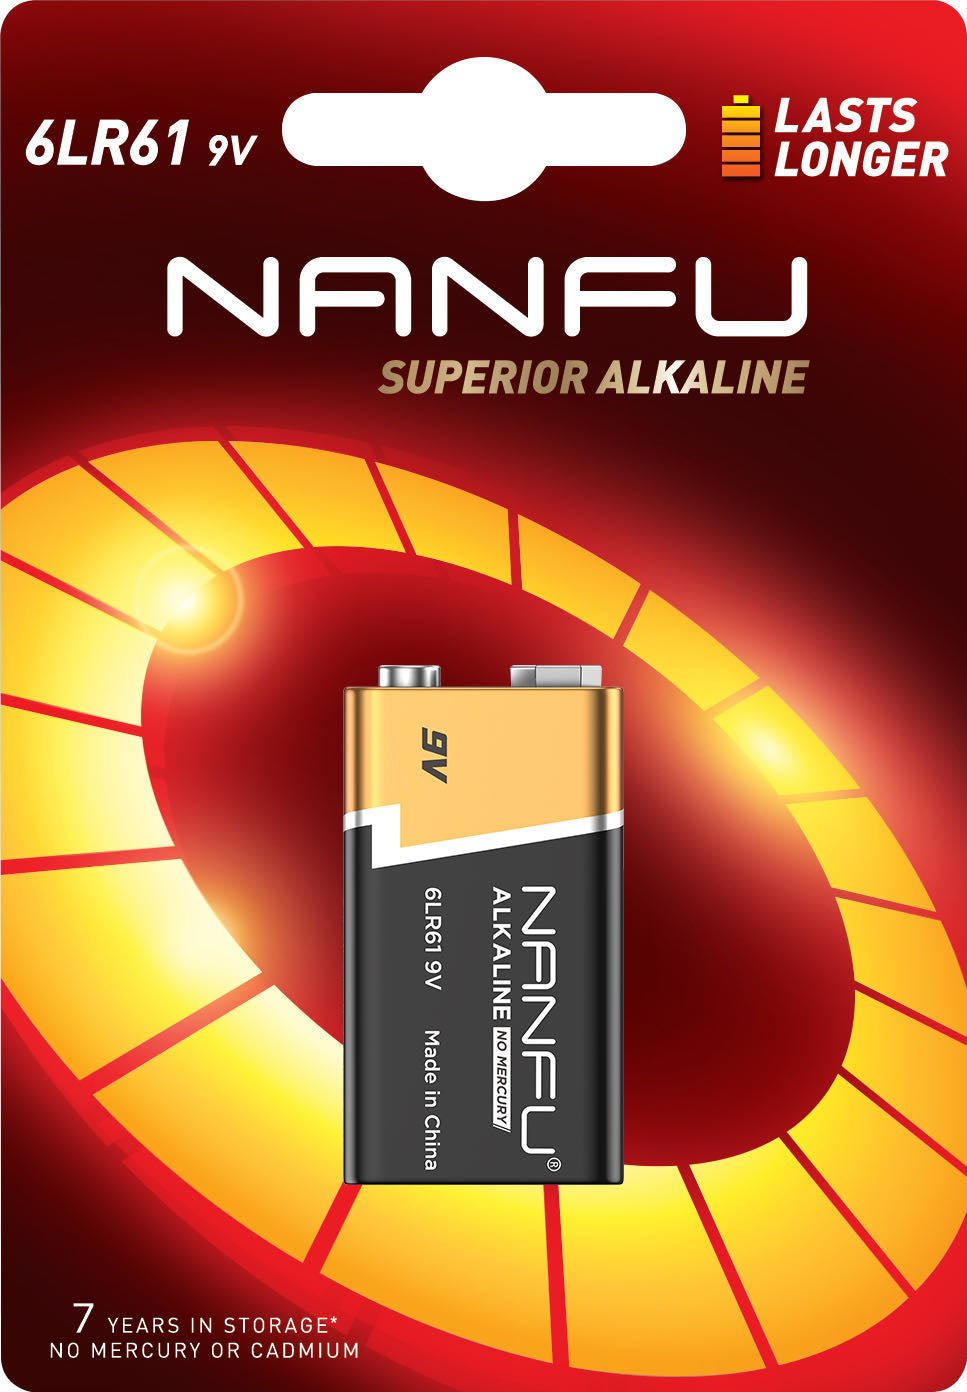 NANFU Alkaline Battery 9V 1 Pack - Nanfuusa